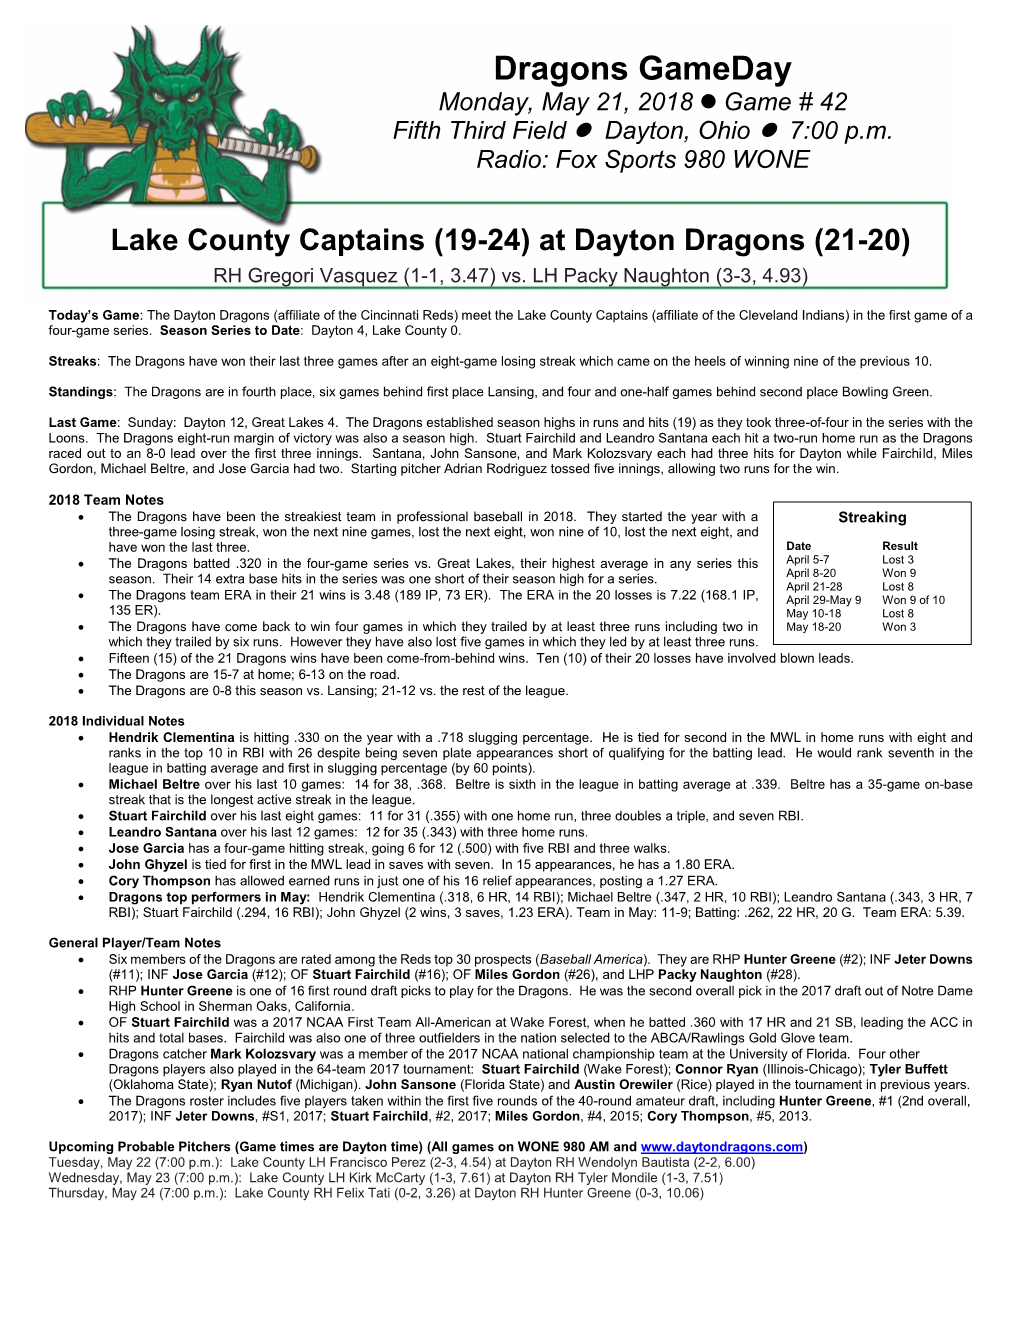 Lake County Captains (19-24) at Dayton Dragons (21-20) RH Gregori Vasquez (1-1, 3.47) Vs